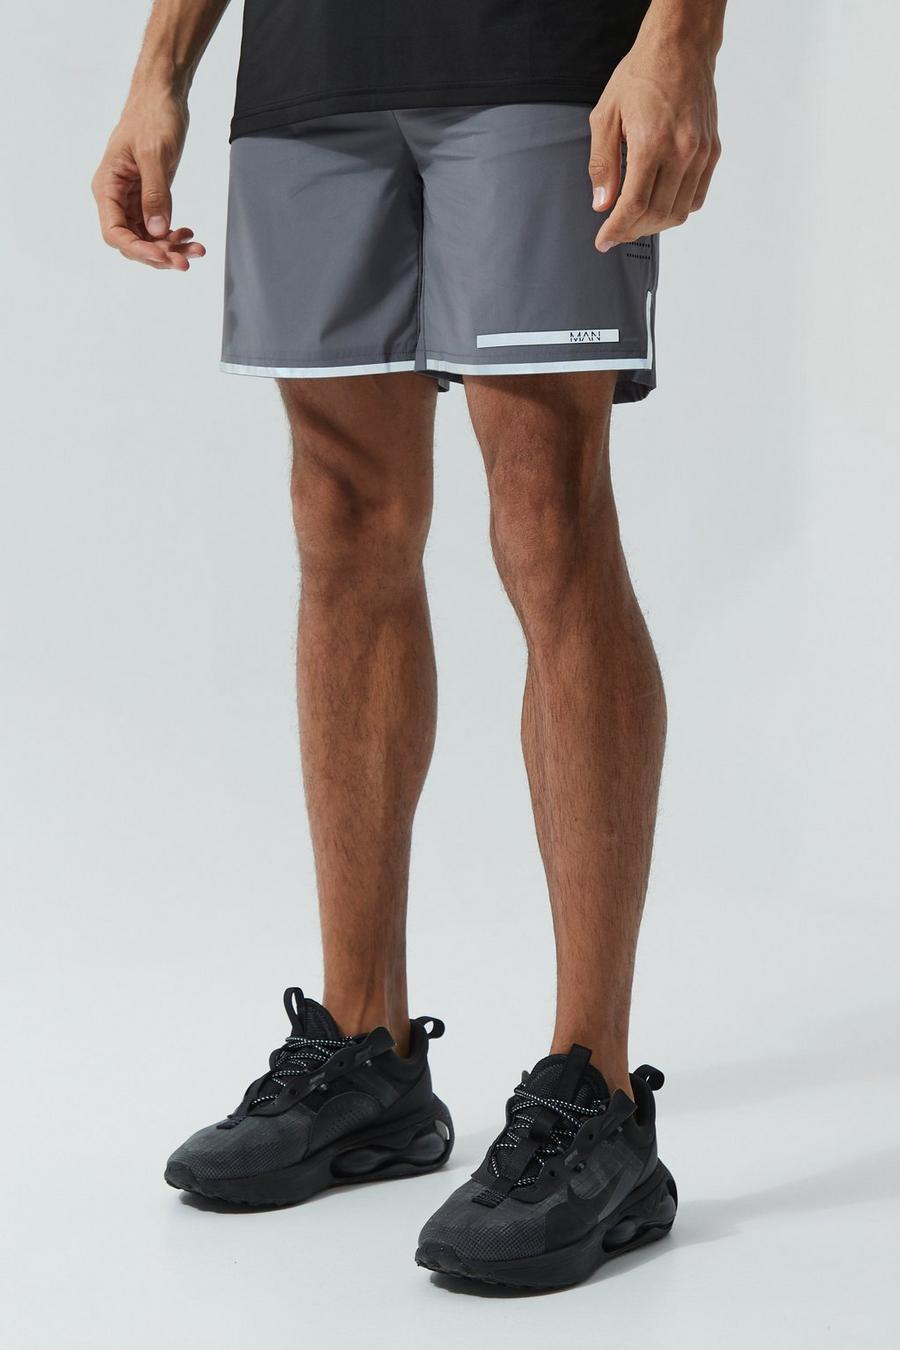 Charcoal grey Tall Man Active 5 Inch Performance Shorts